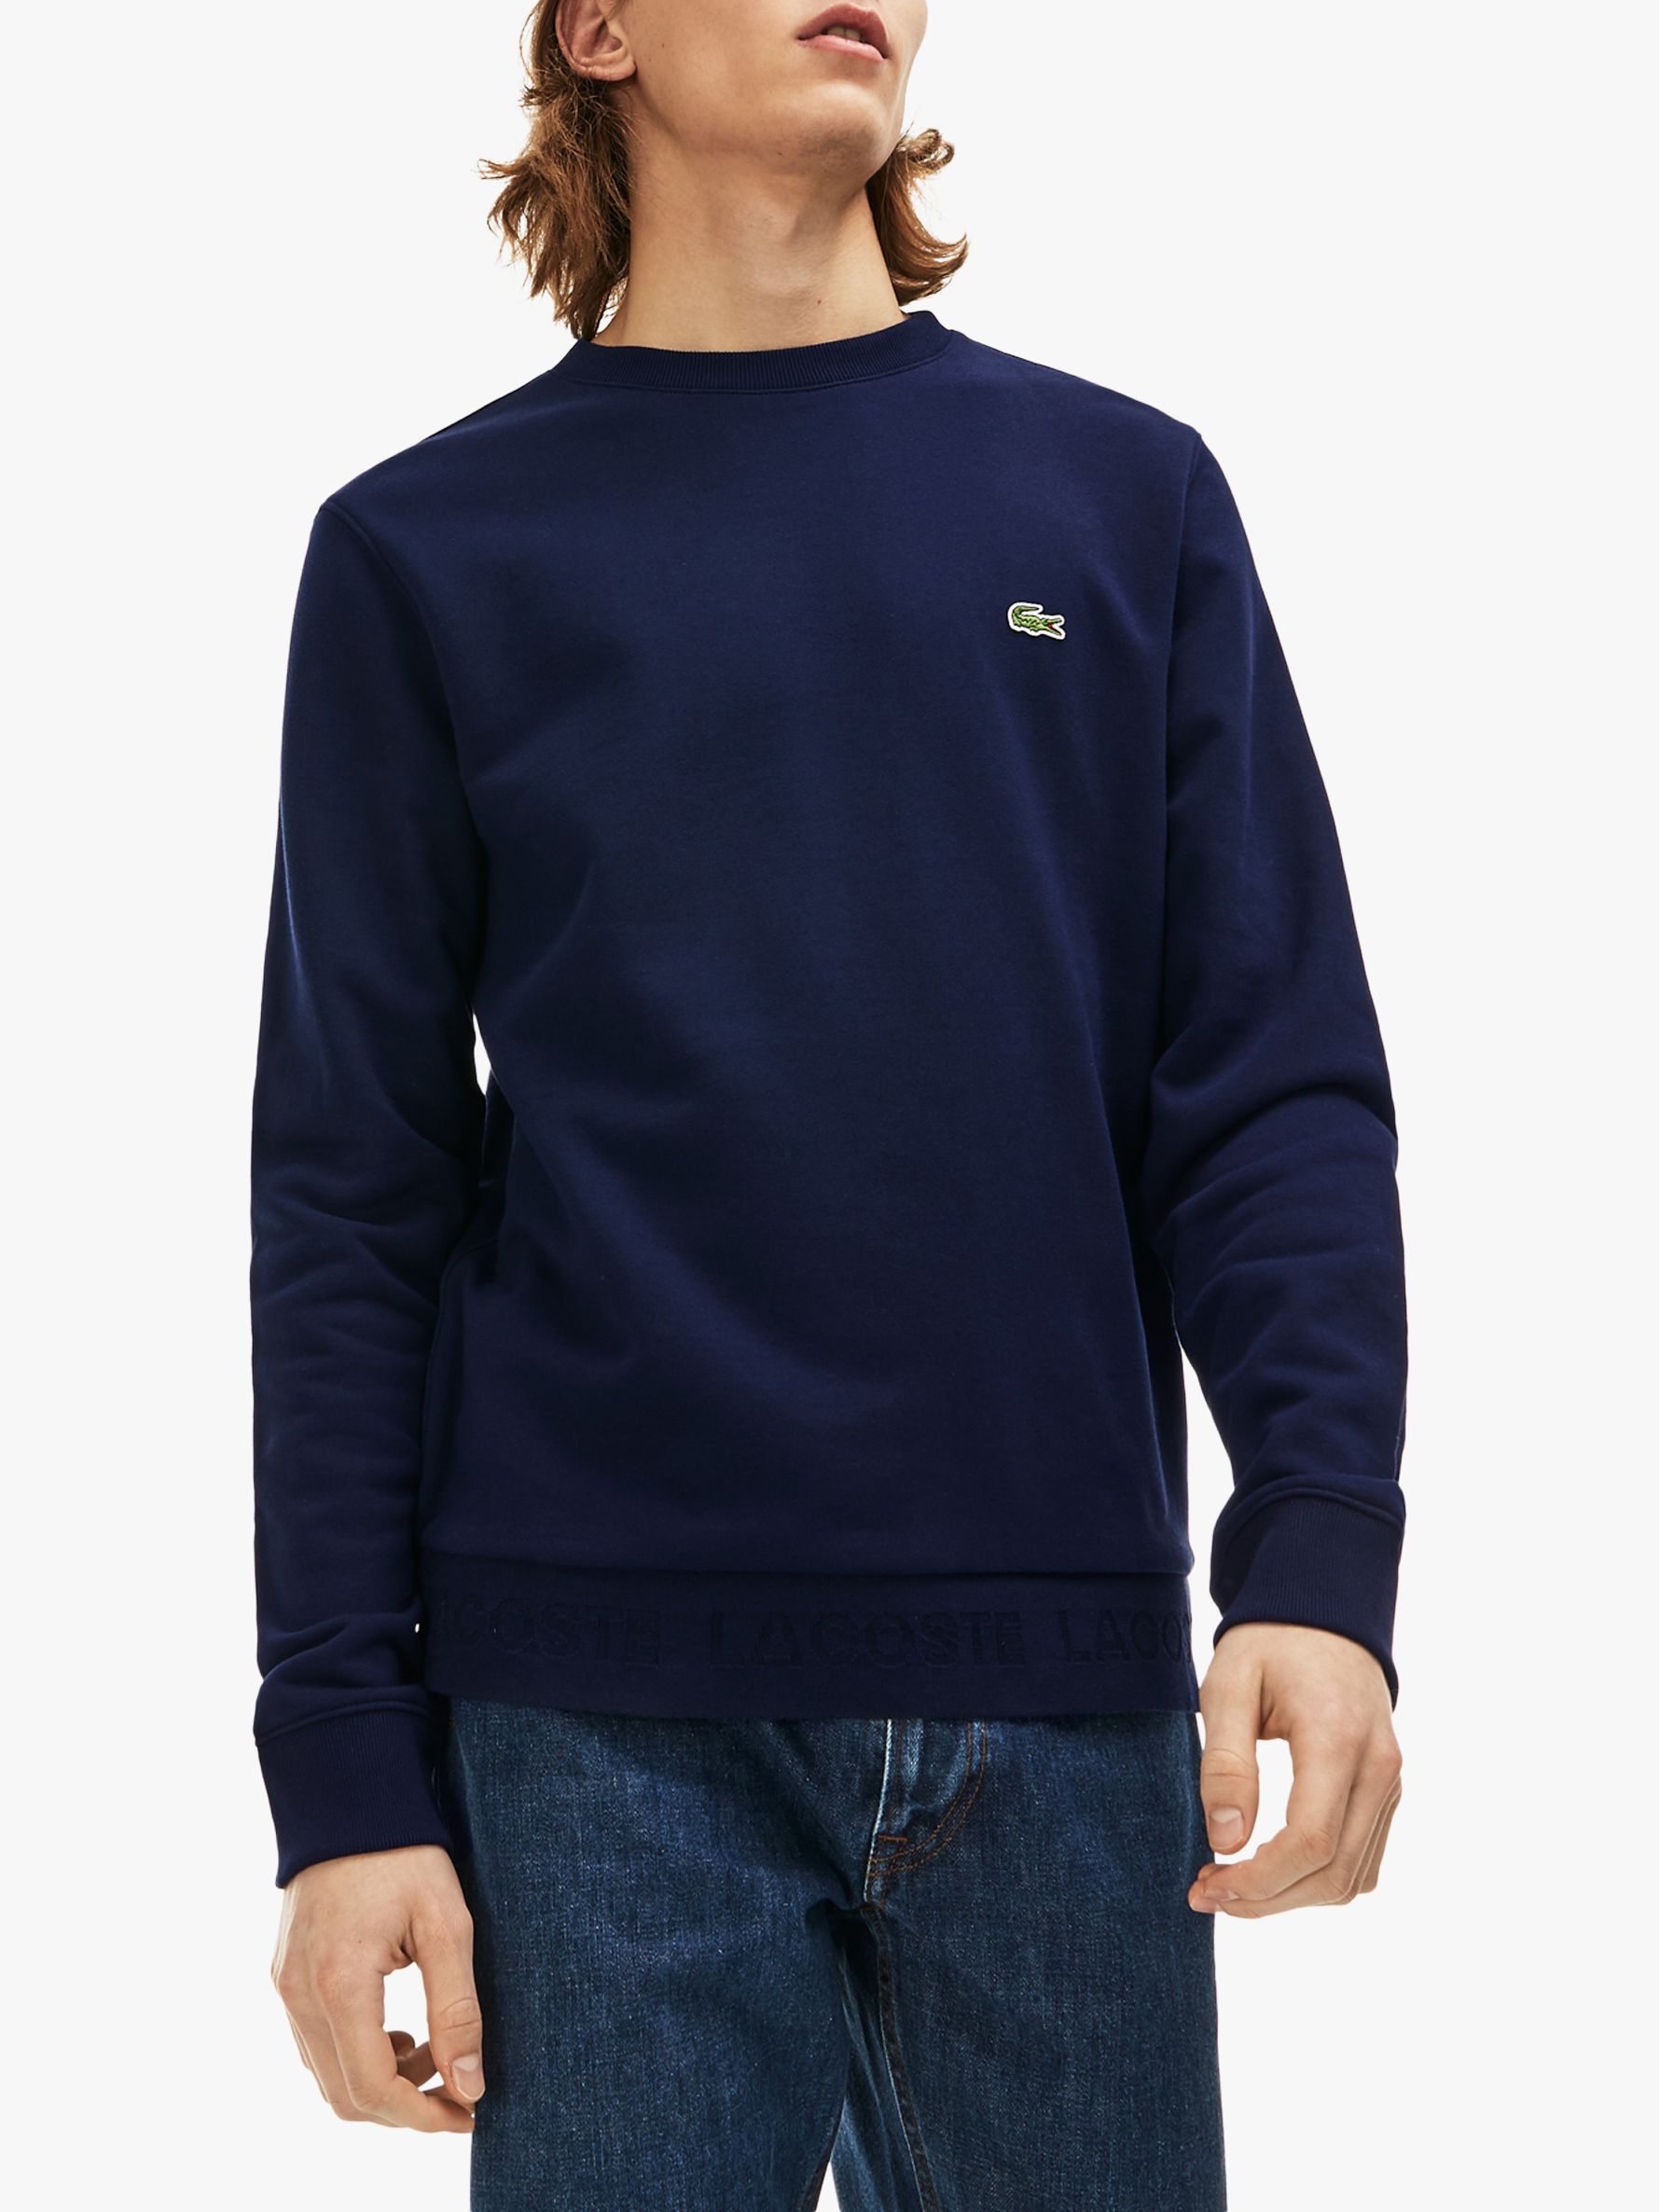 mens navy sweatshirt, amazing clearance sale off 68% -